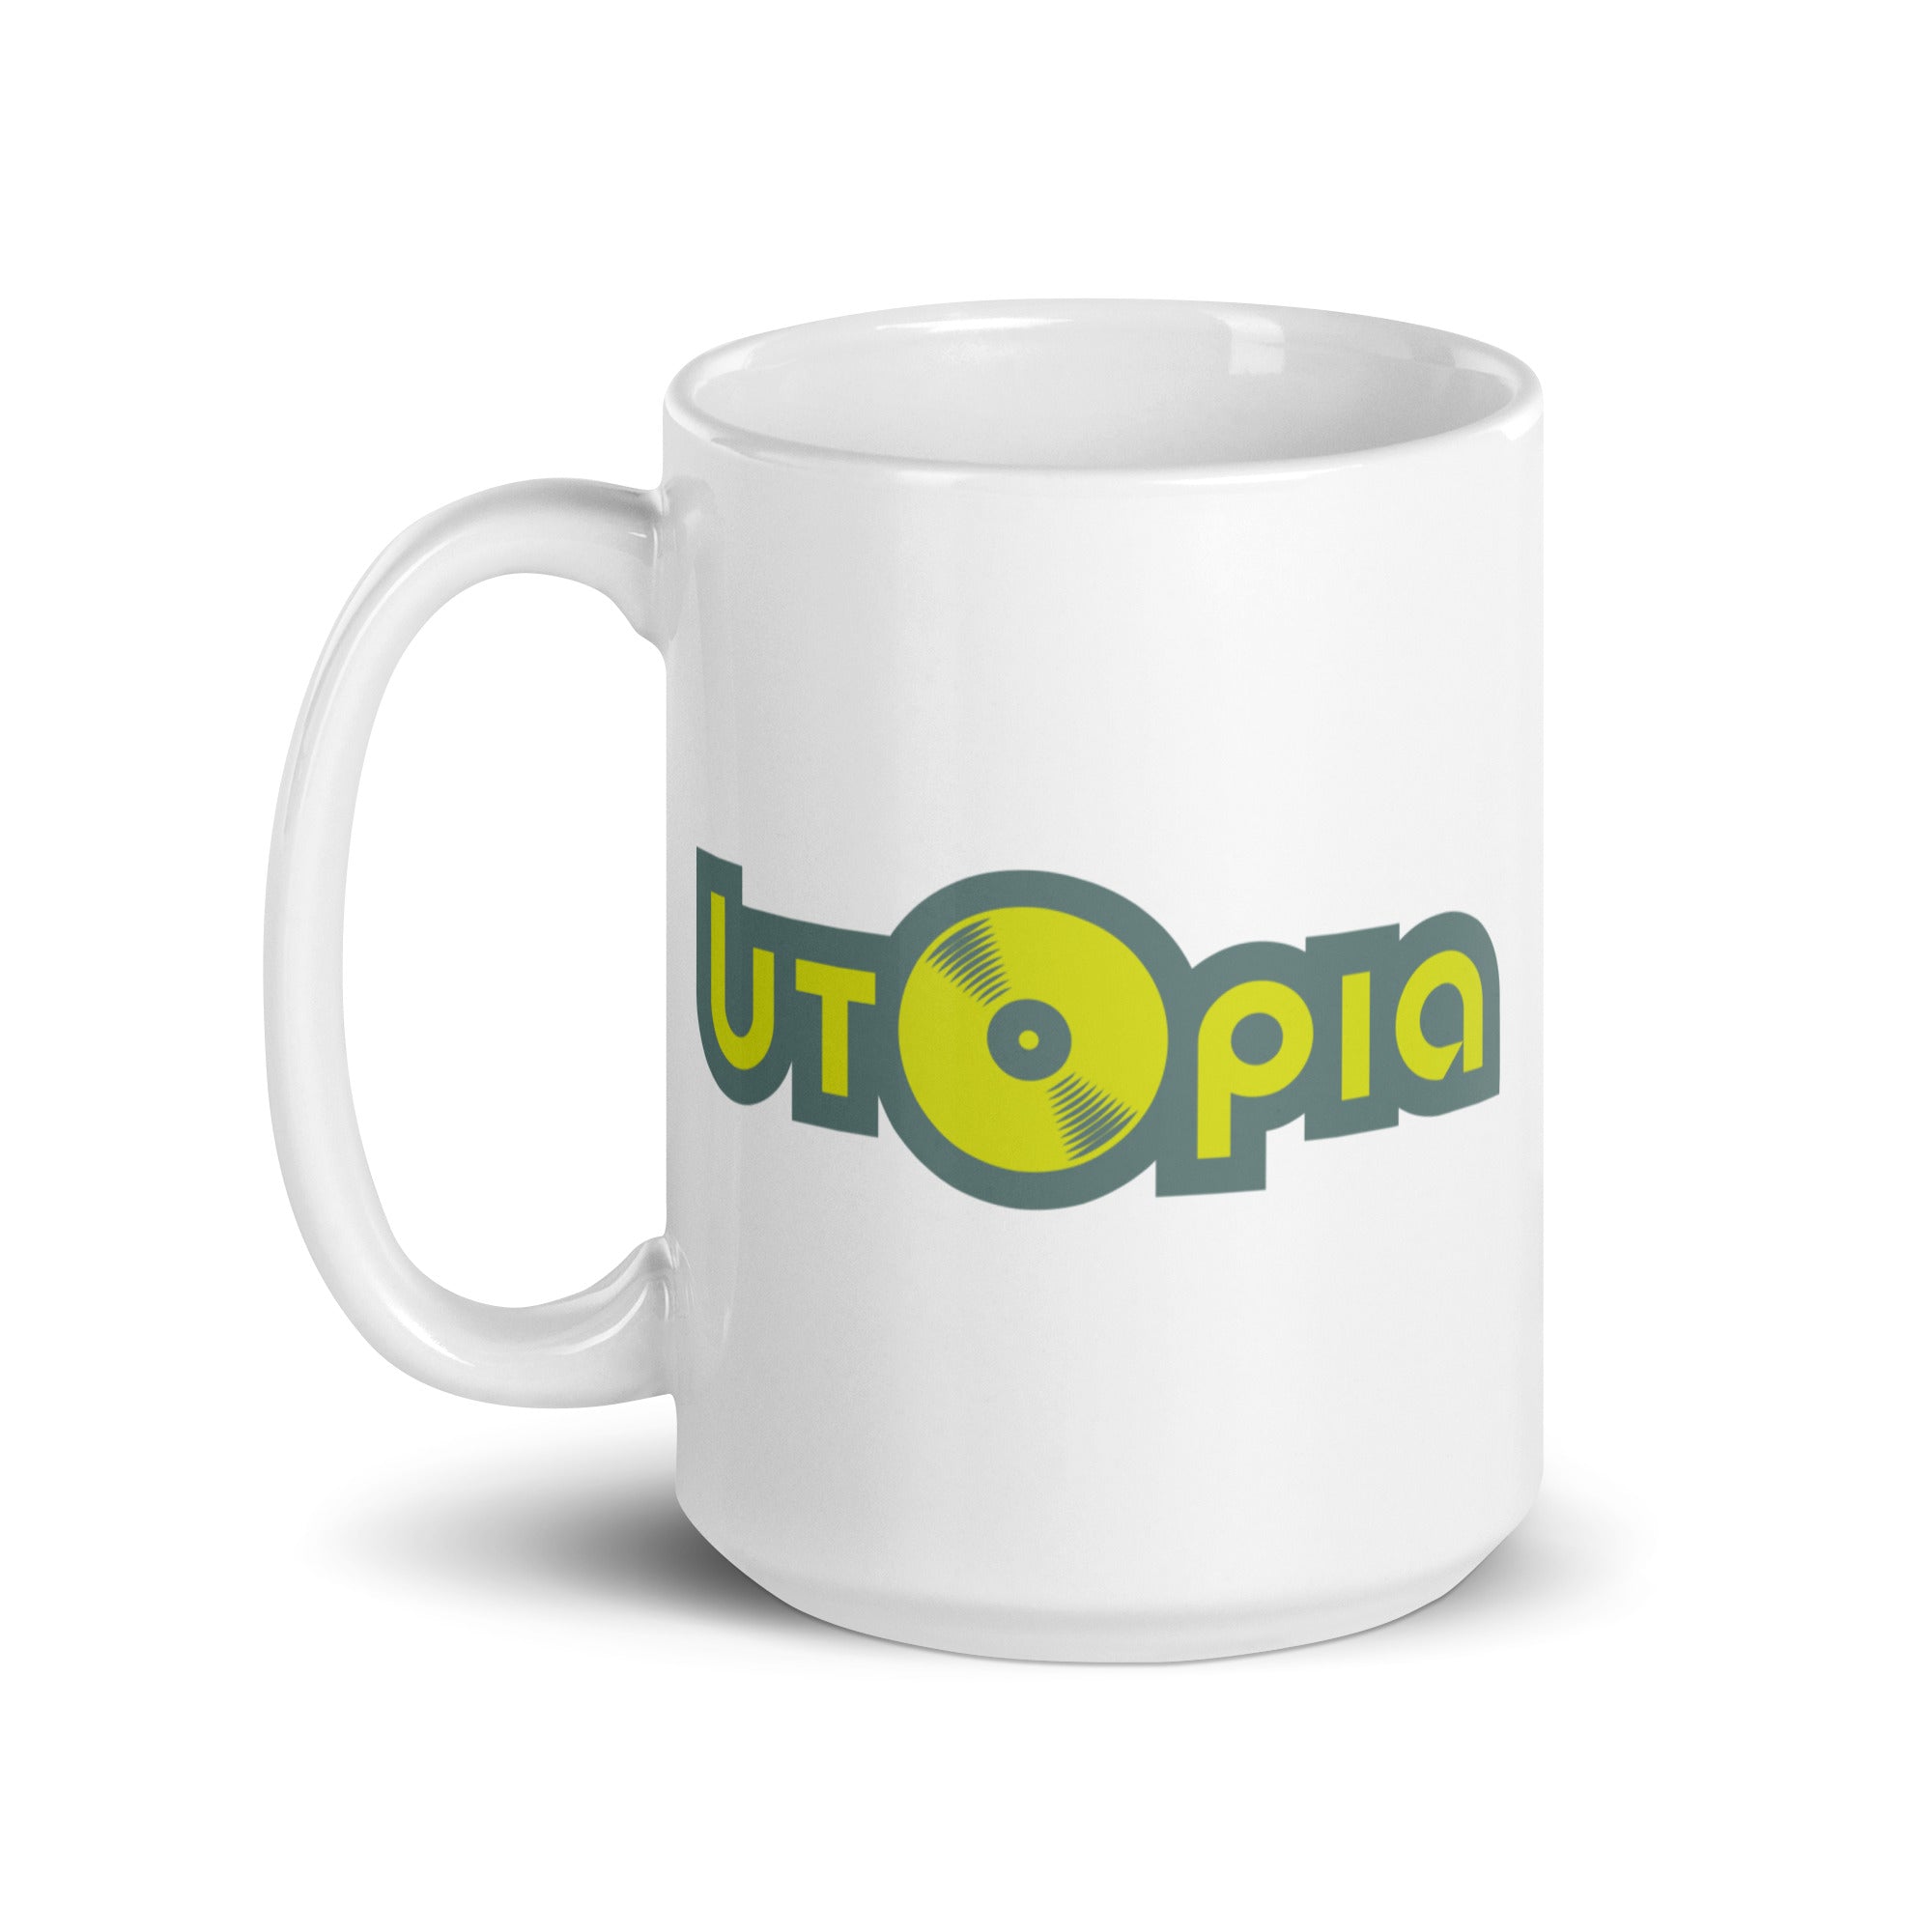 Utopia: Mug